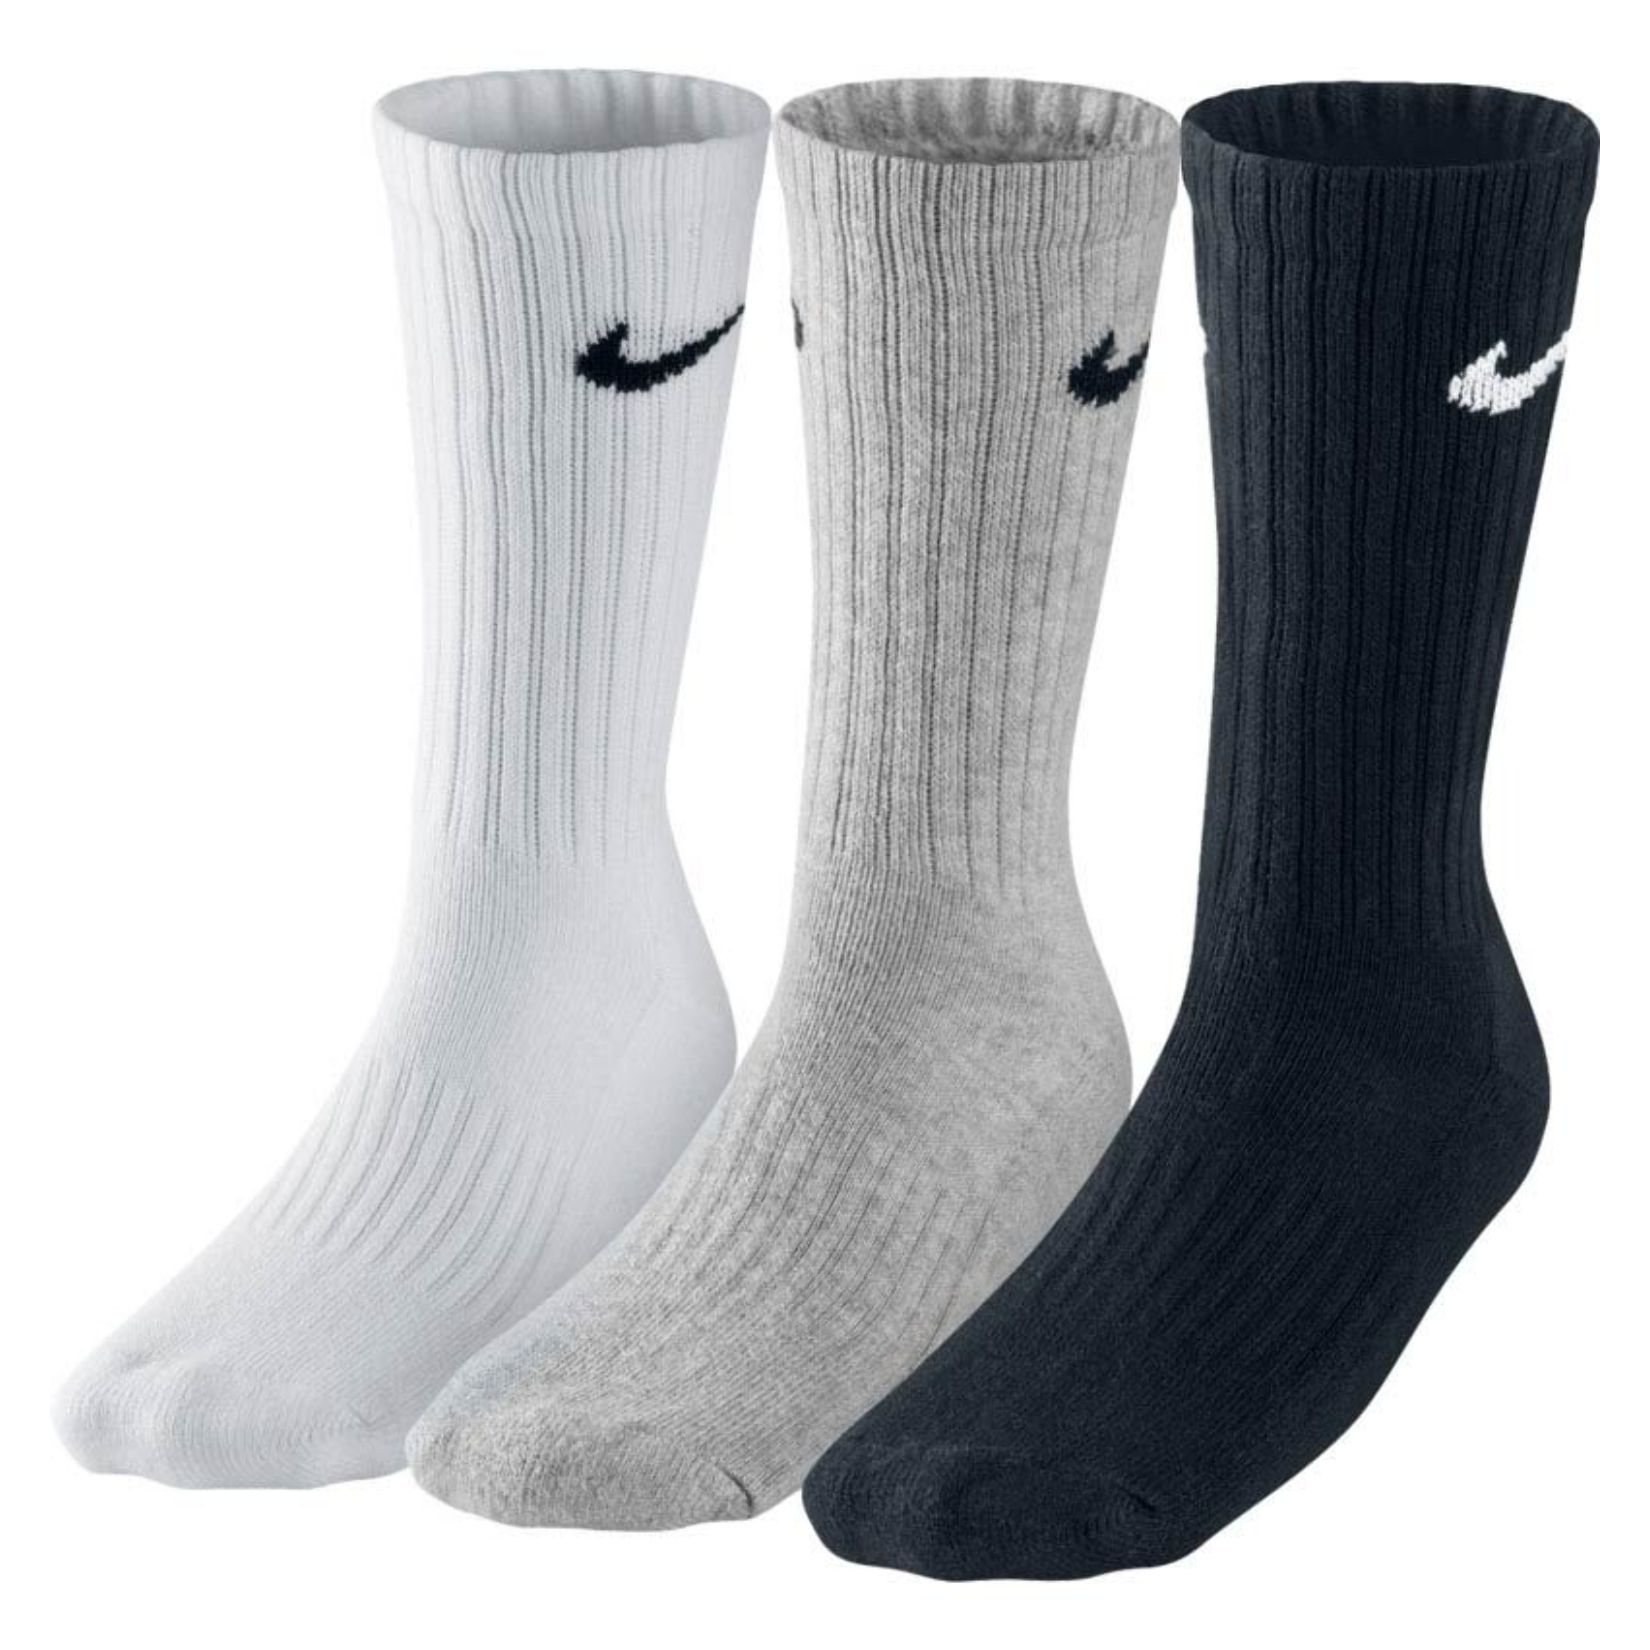 Nike 3 Pack Value Cotton Crew Training Socks - Kitlocker.com